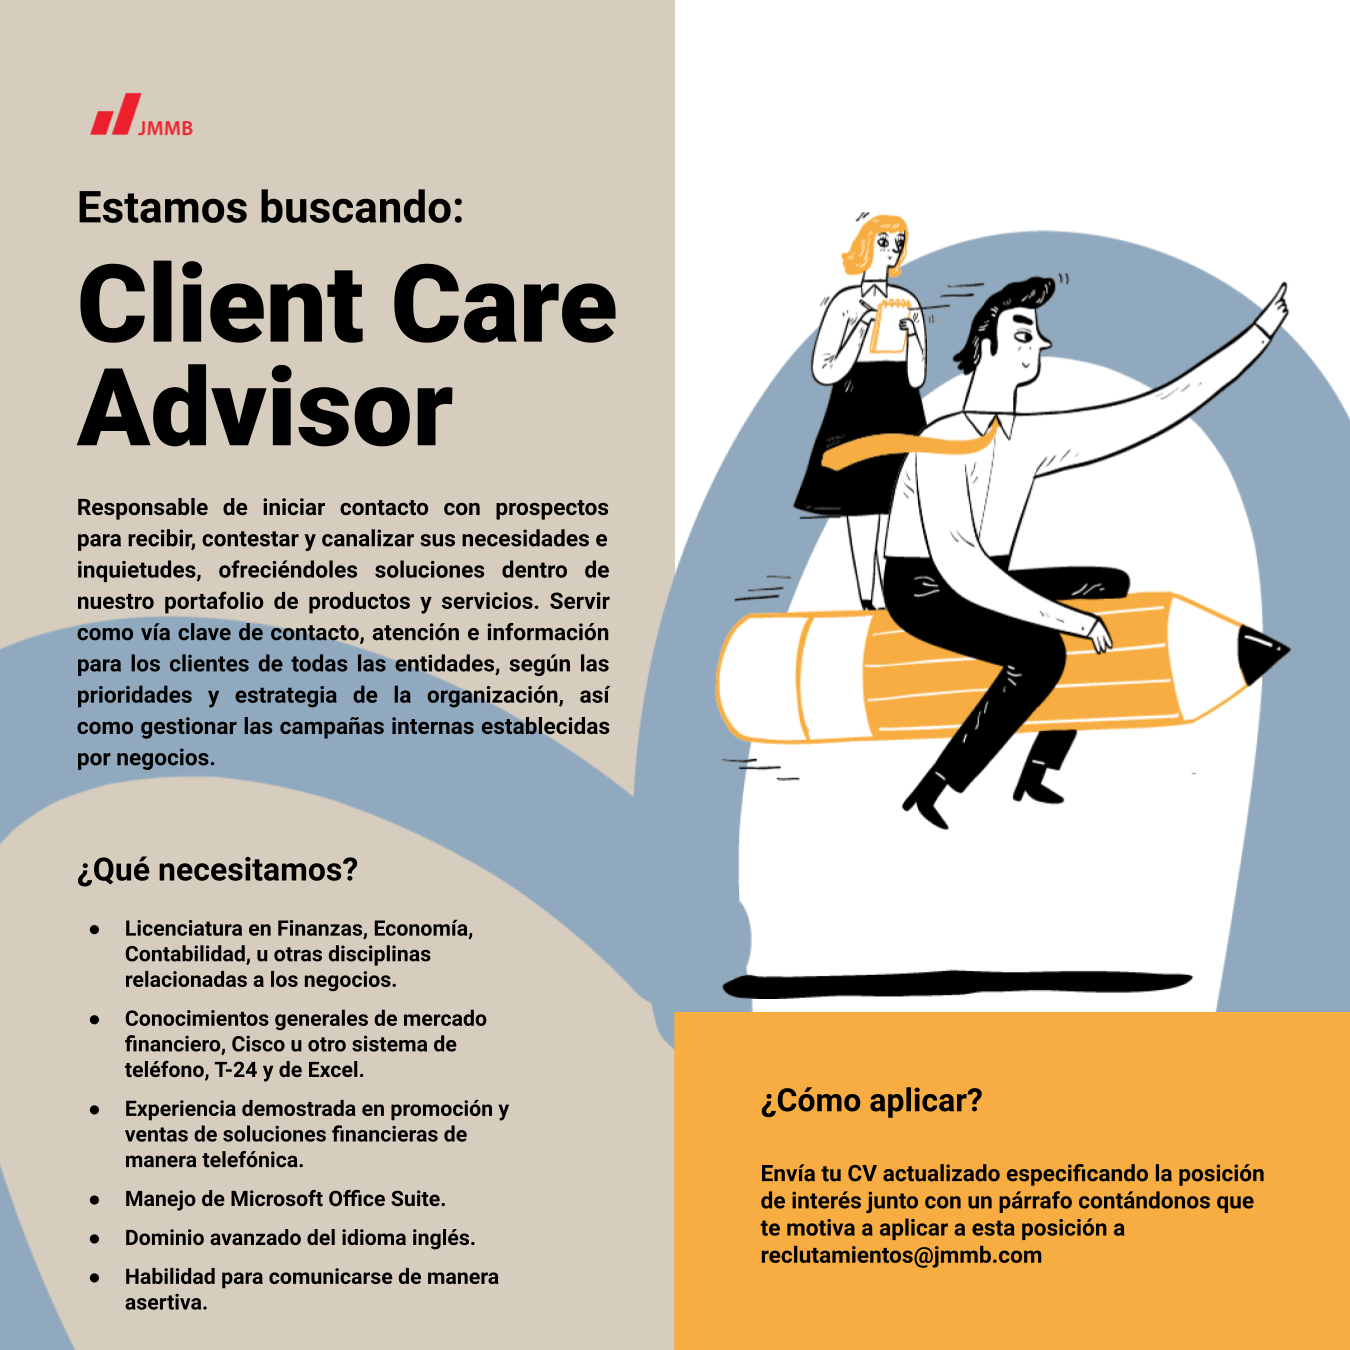 Client Care Advisor